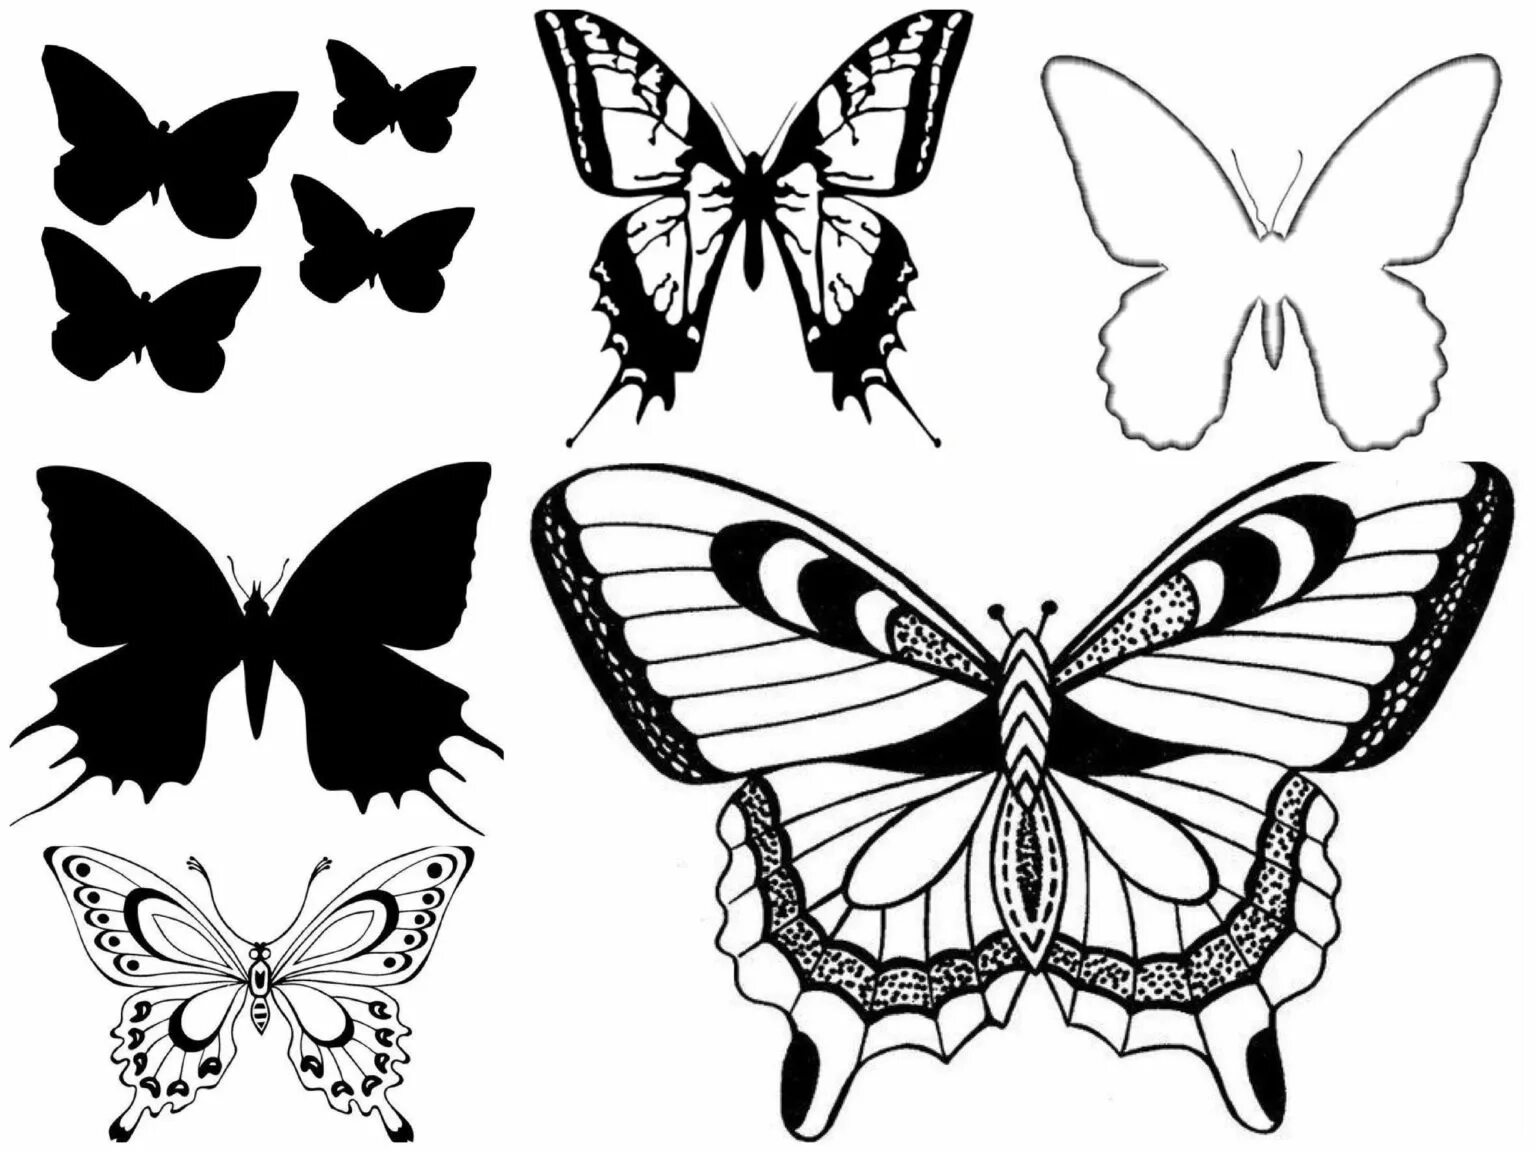 Шаблон бабочек для печати. Трафареты бабочки. Трафарет бабочки для вырезания. Трафареты бабочек для декора. Бабочка шаблон для вырезания.